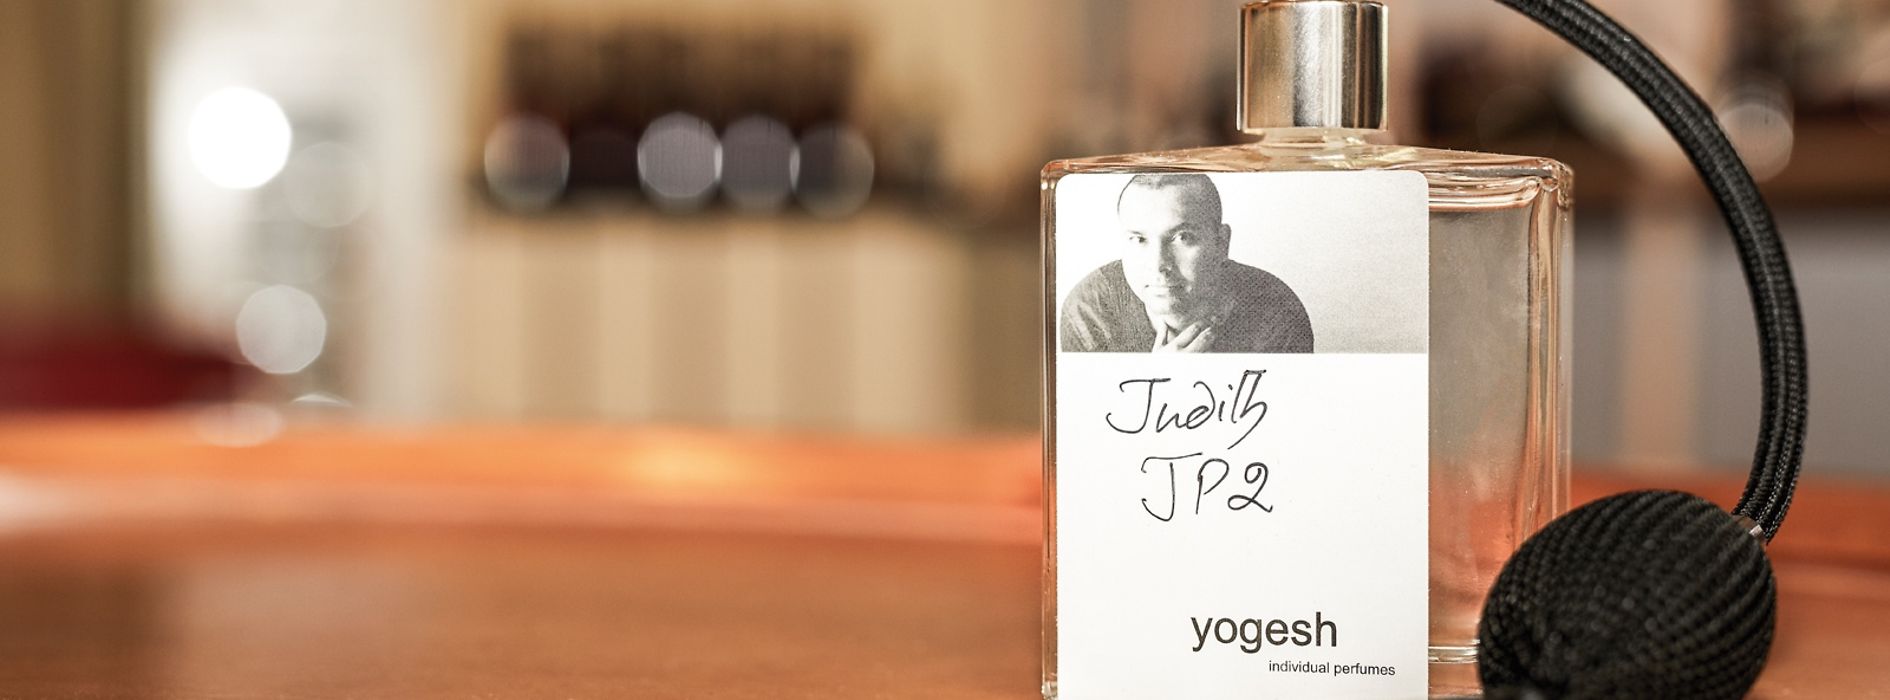 yogesh Parfums, perfume bottle